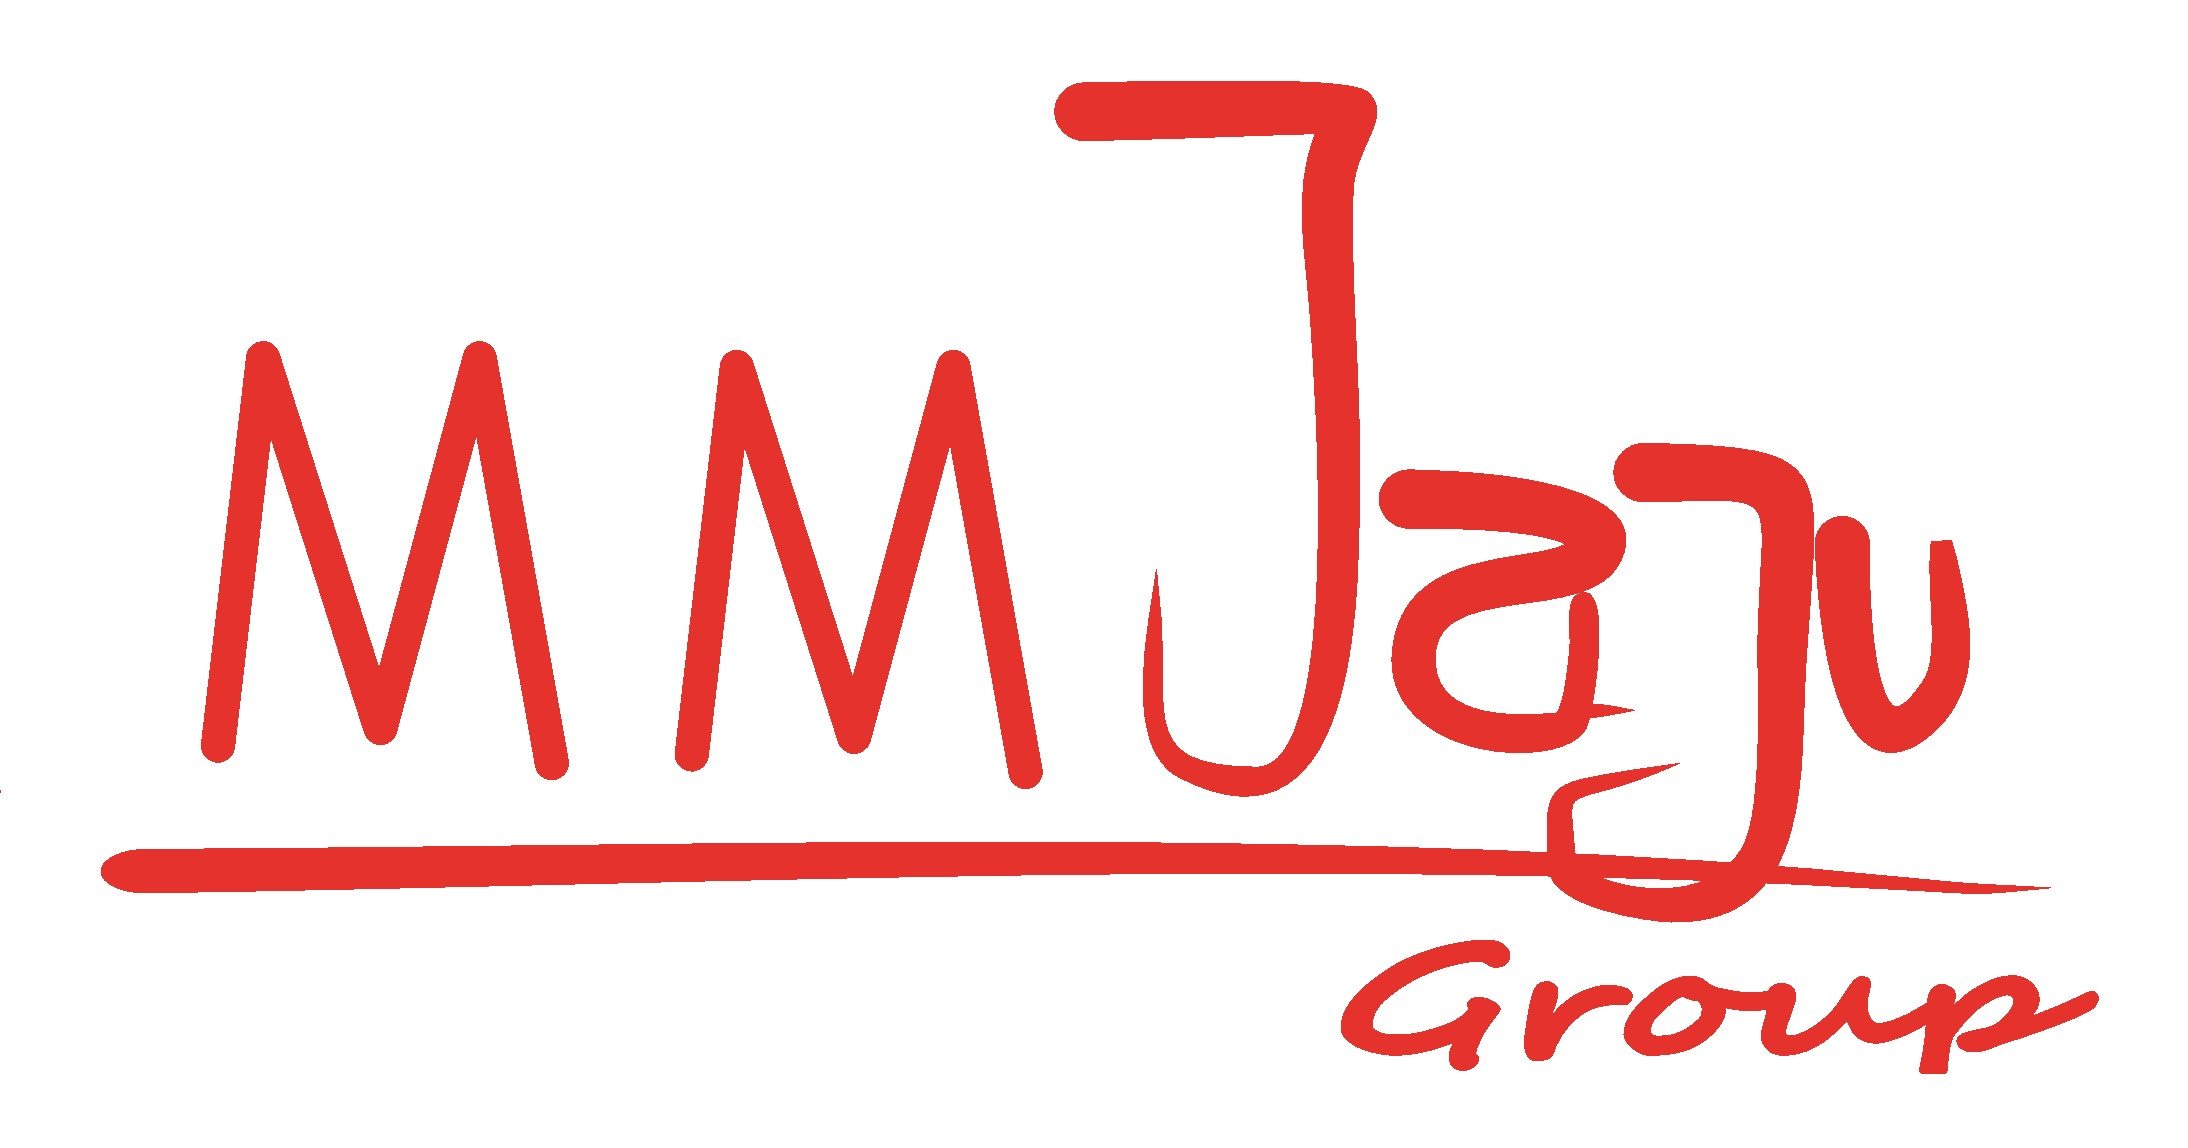 MM Jaju Group